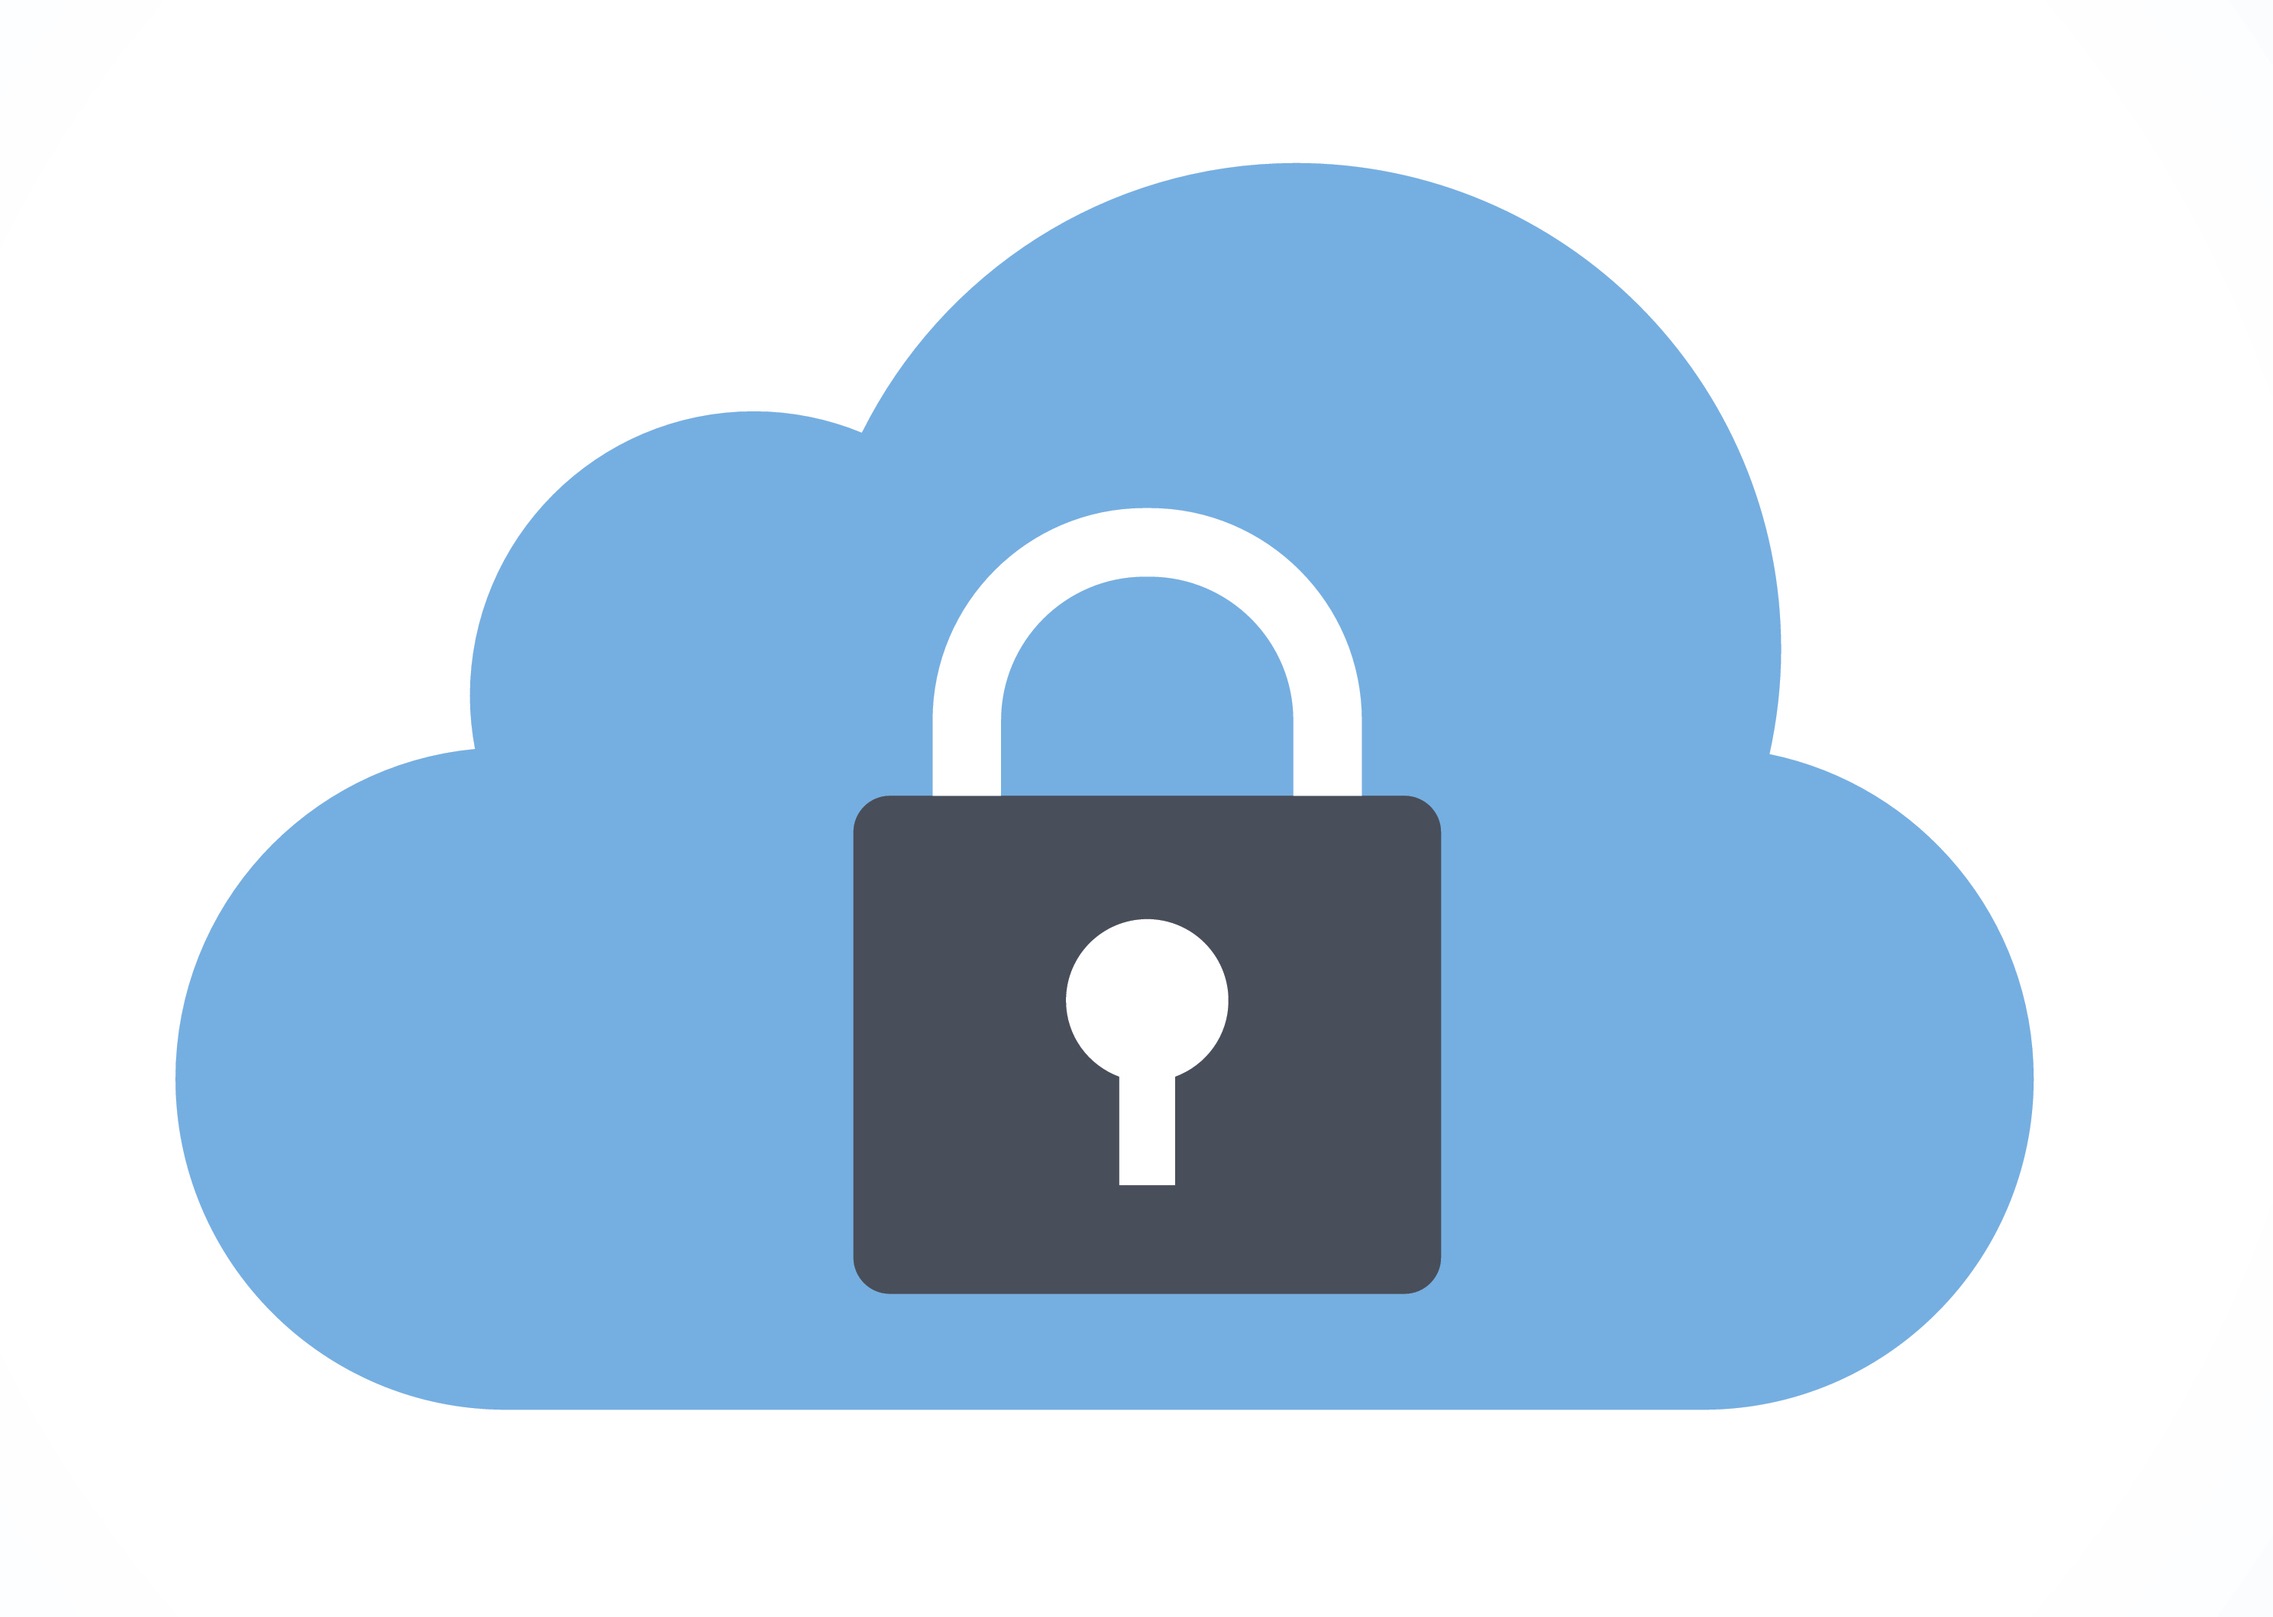 Cisco CloudCenter: Using ‘Let’s Encrypt’